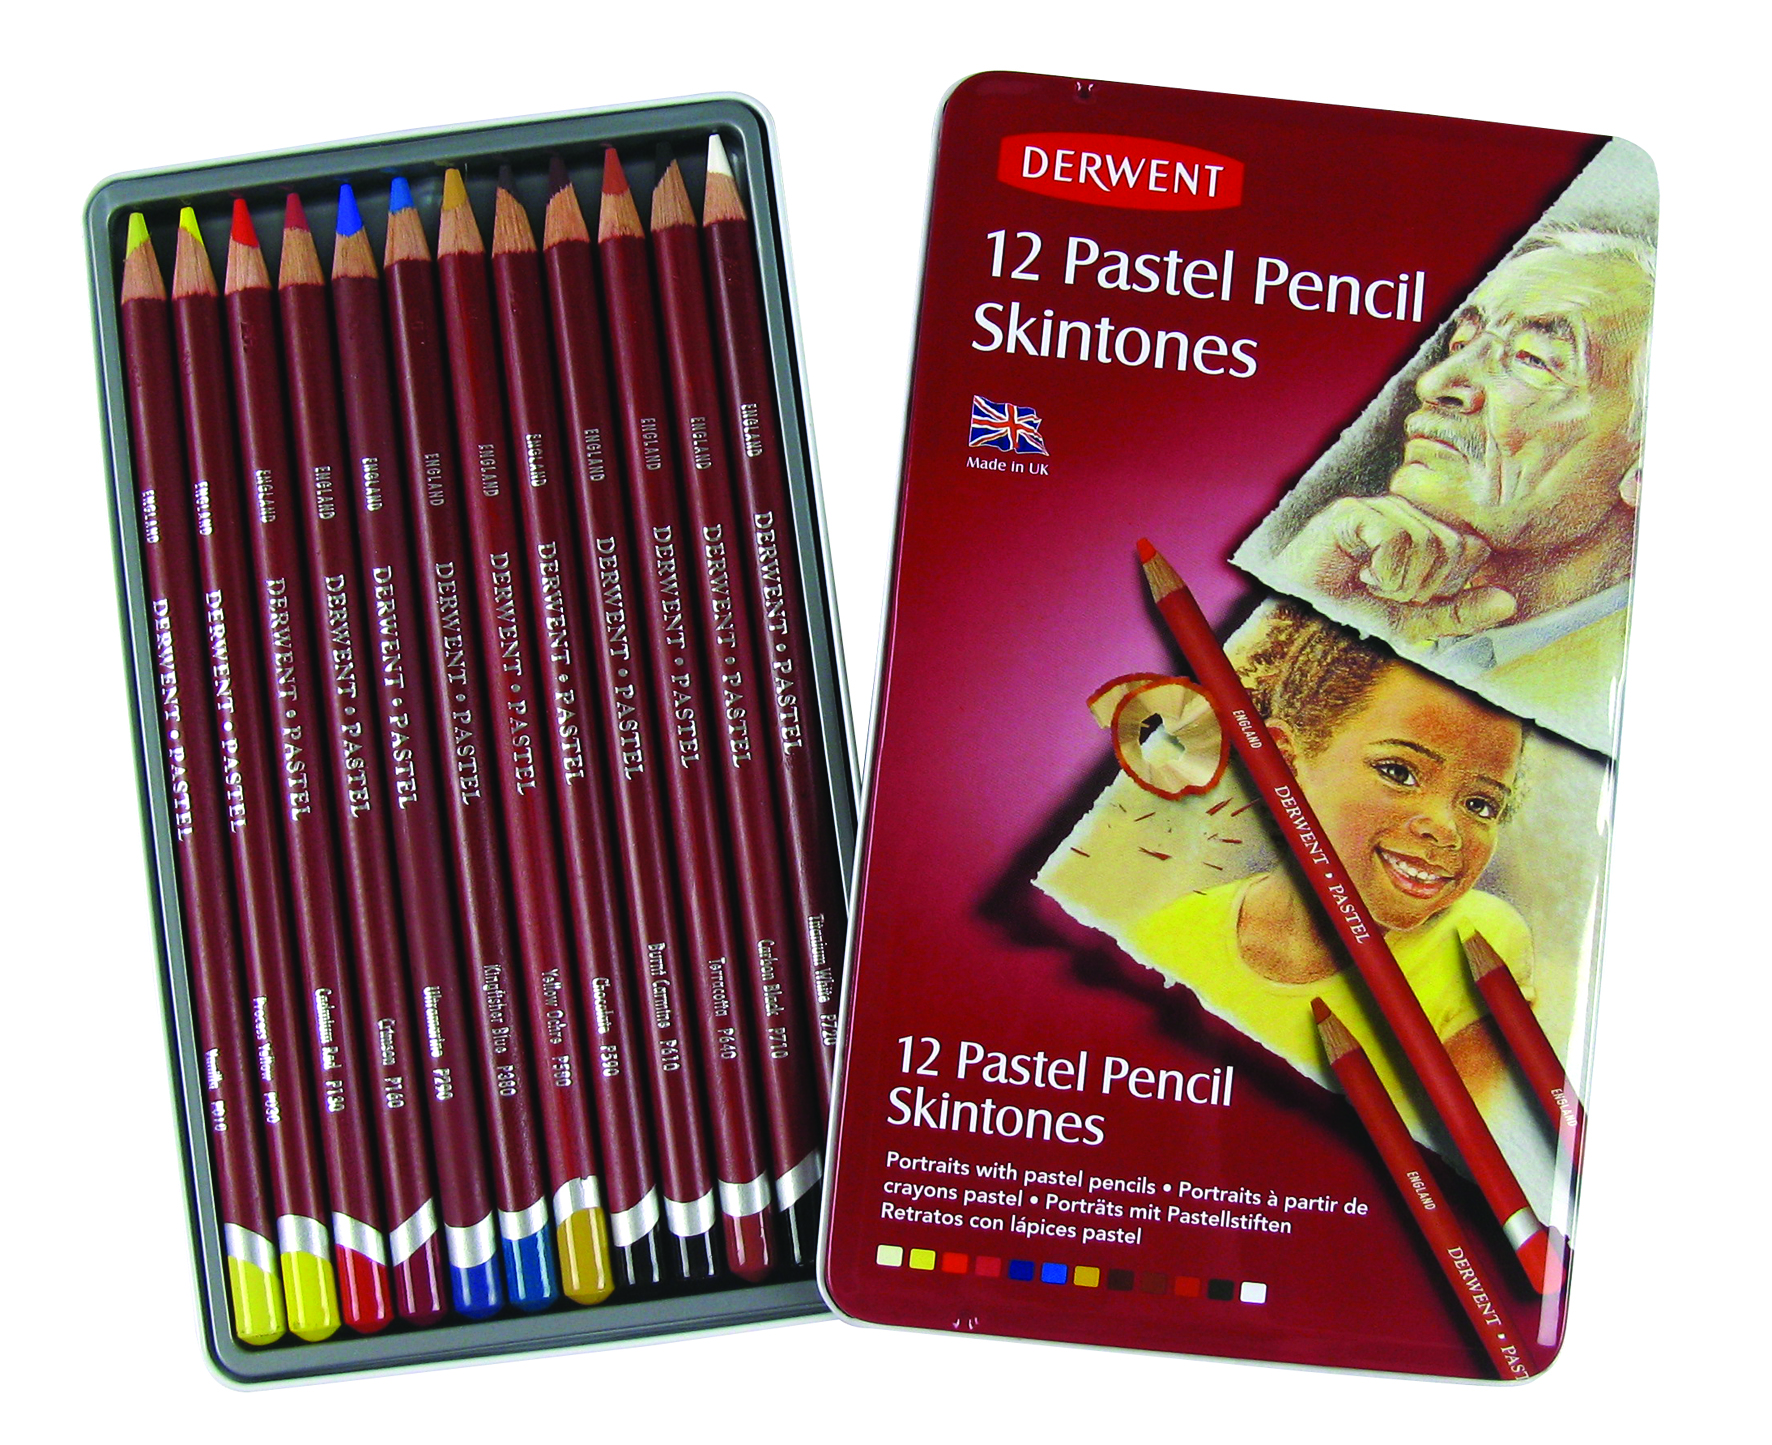 Derwent Pastel Pencil 12 Tin Skintone Jarrold, Norwich